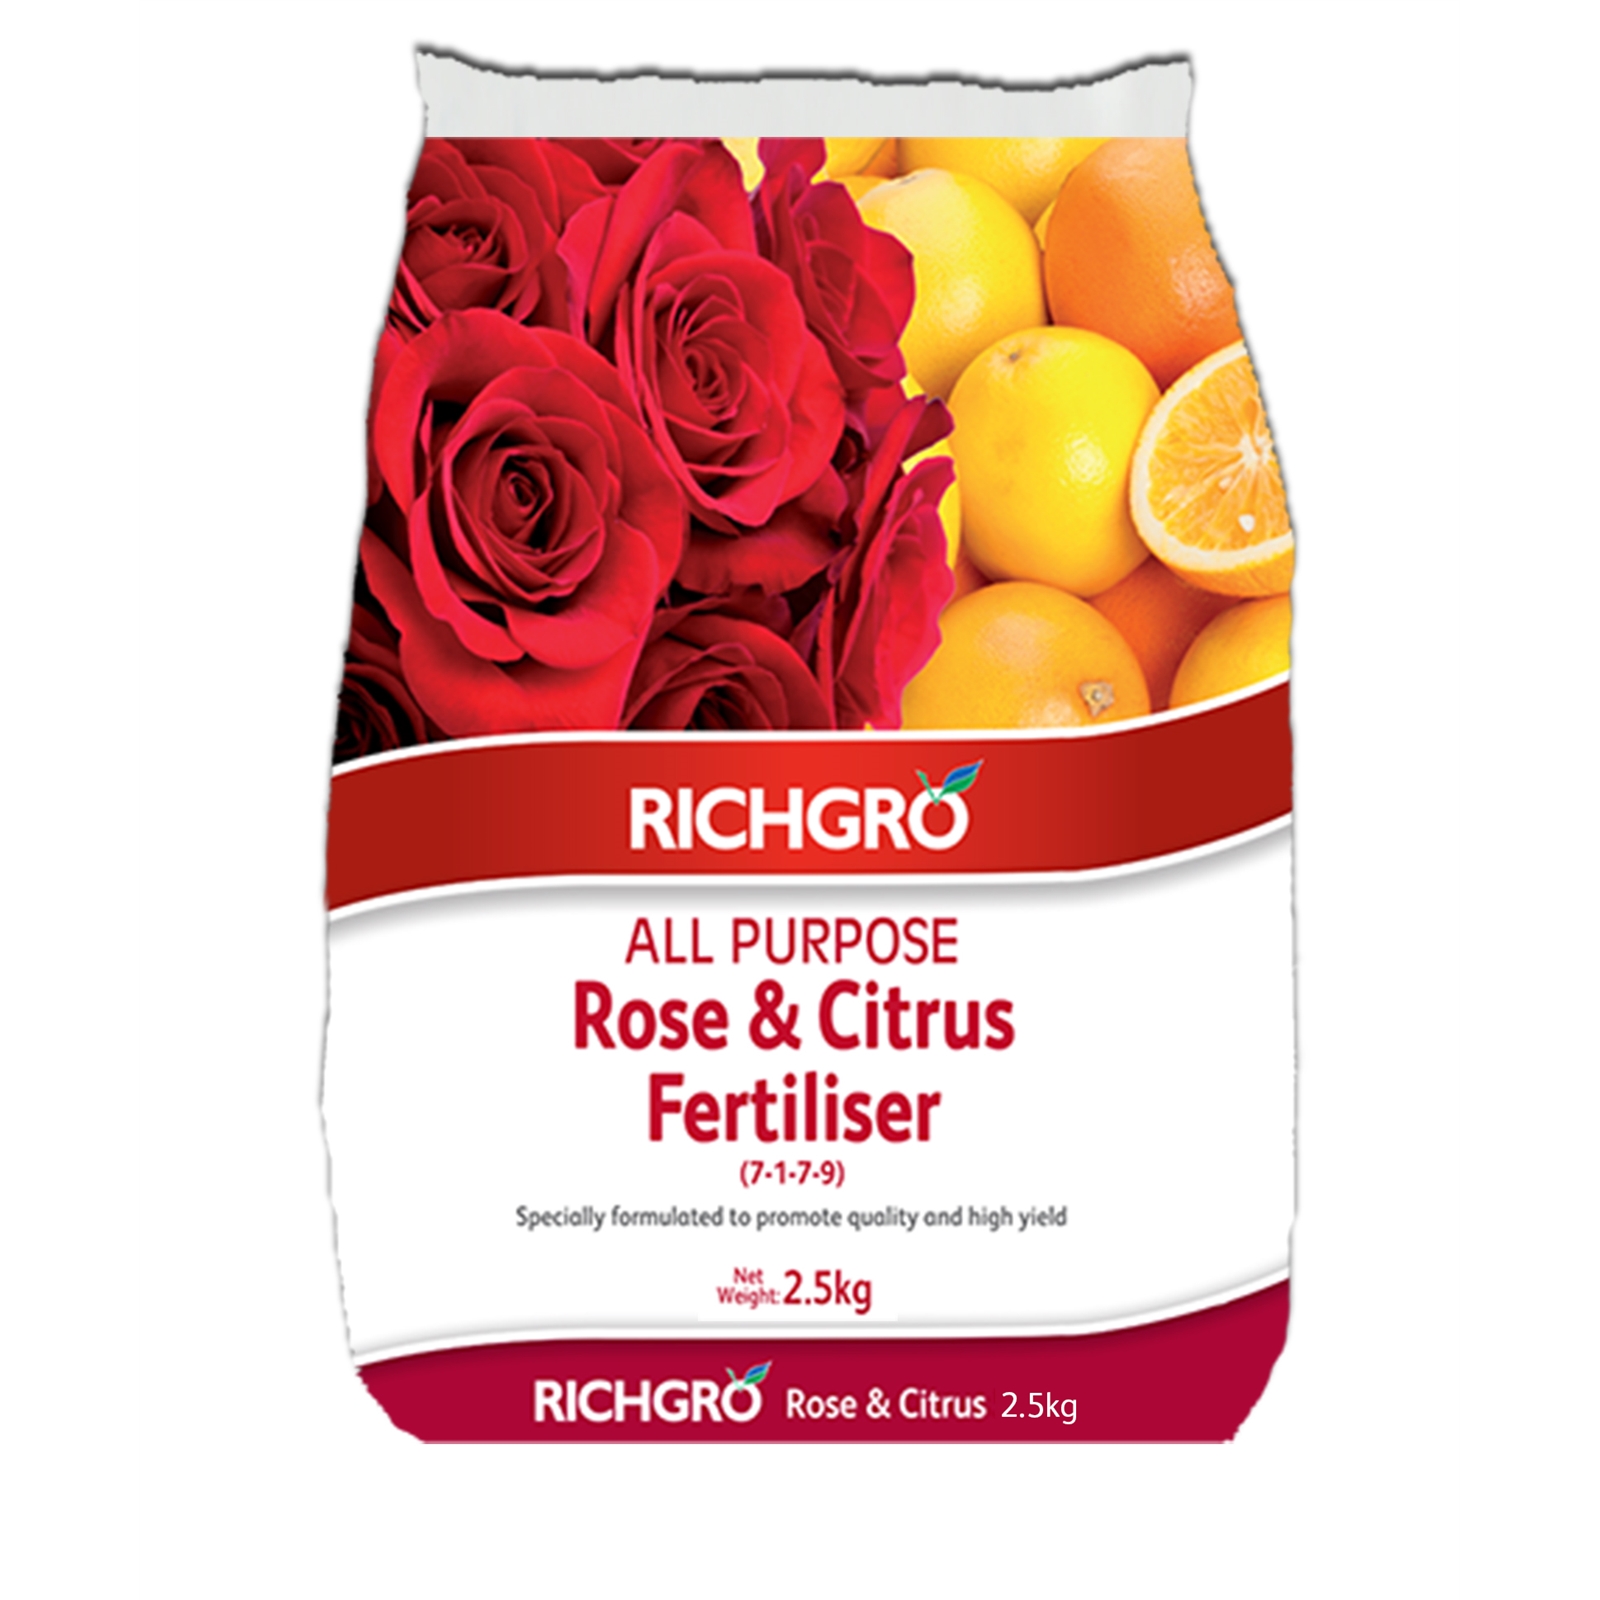 Richgro 2.5kg All Purpose Rose And Citrus Fertiliser